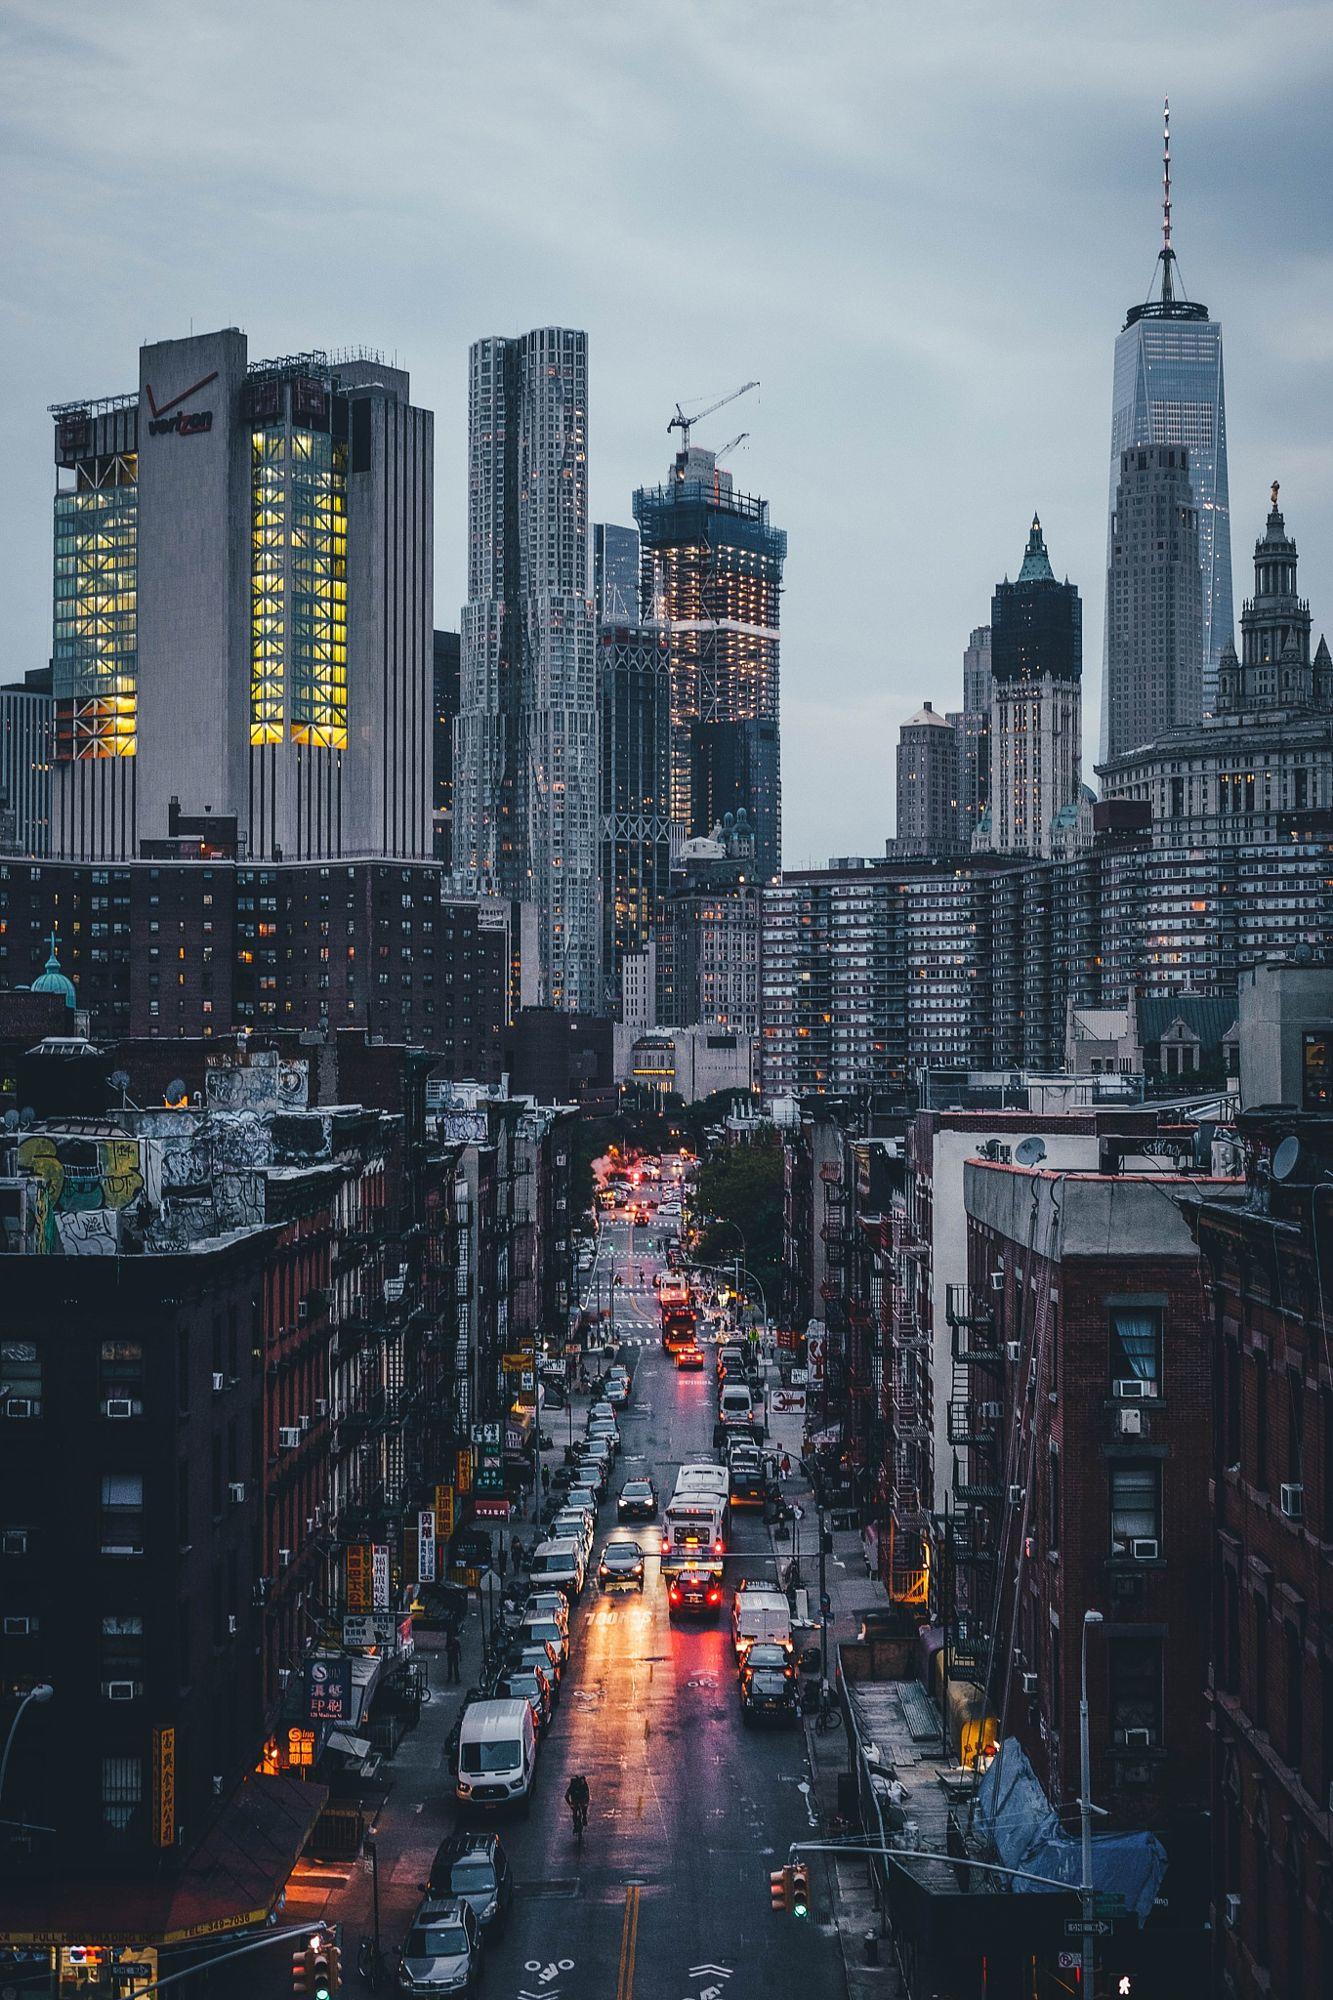 Chinatown, Manhattan